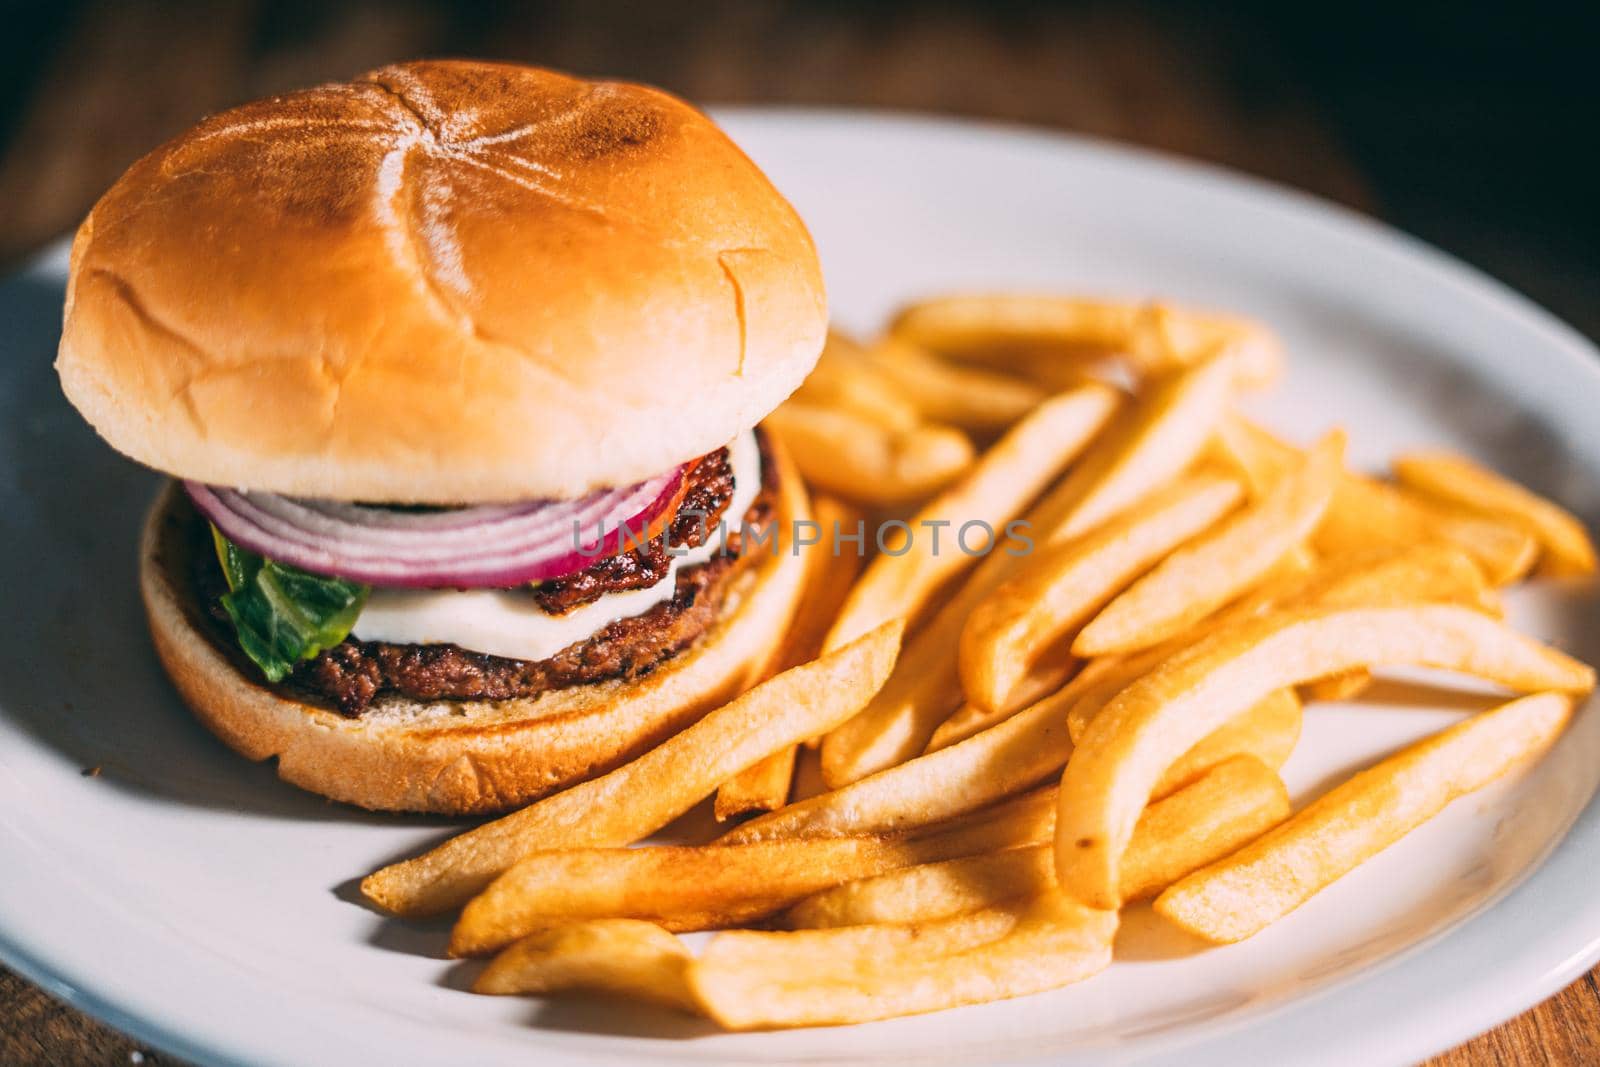 A plate of juicy hamburger and fries